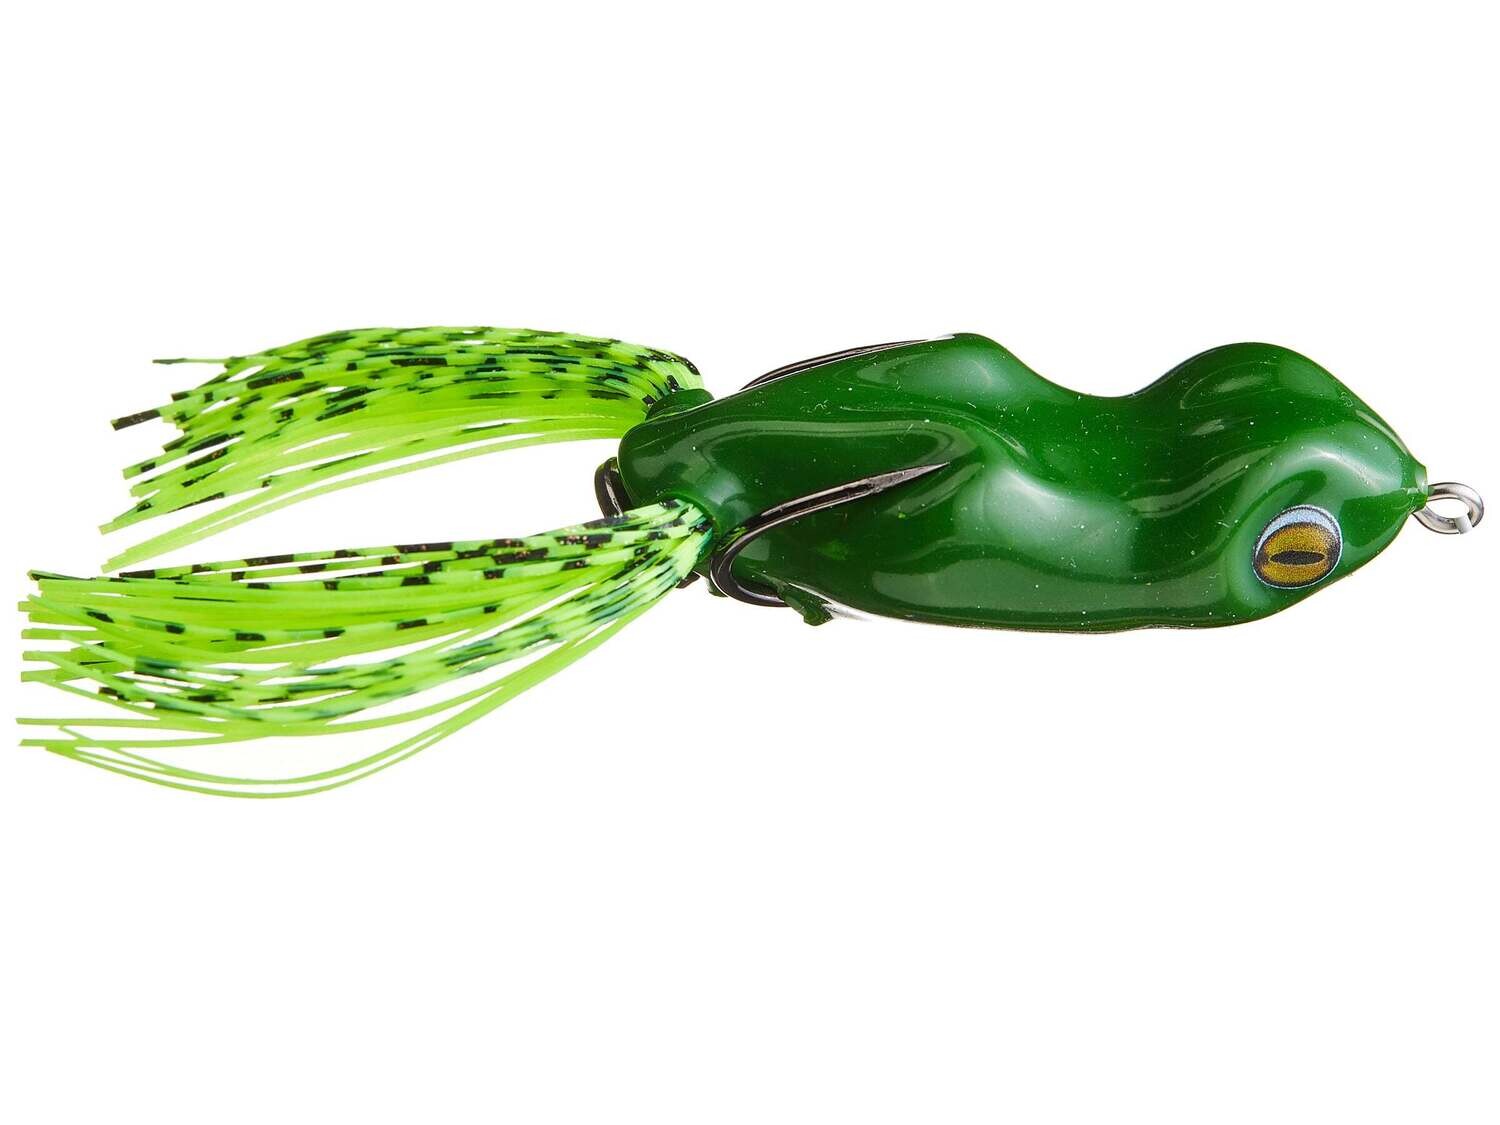 Scum Frog TSH-1201 Trophy Series Topwater Frog, 1/2 oz, Green, Floating